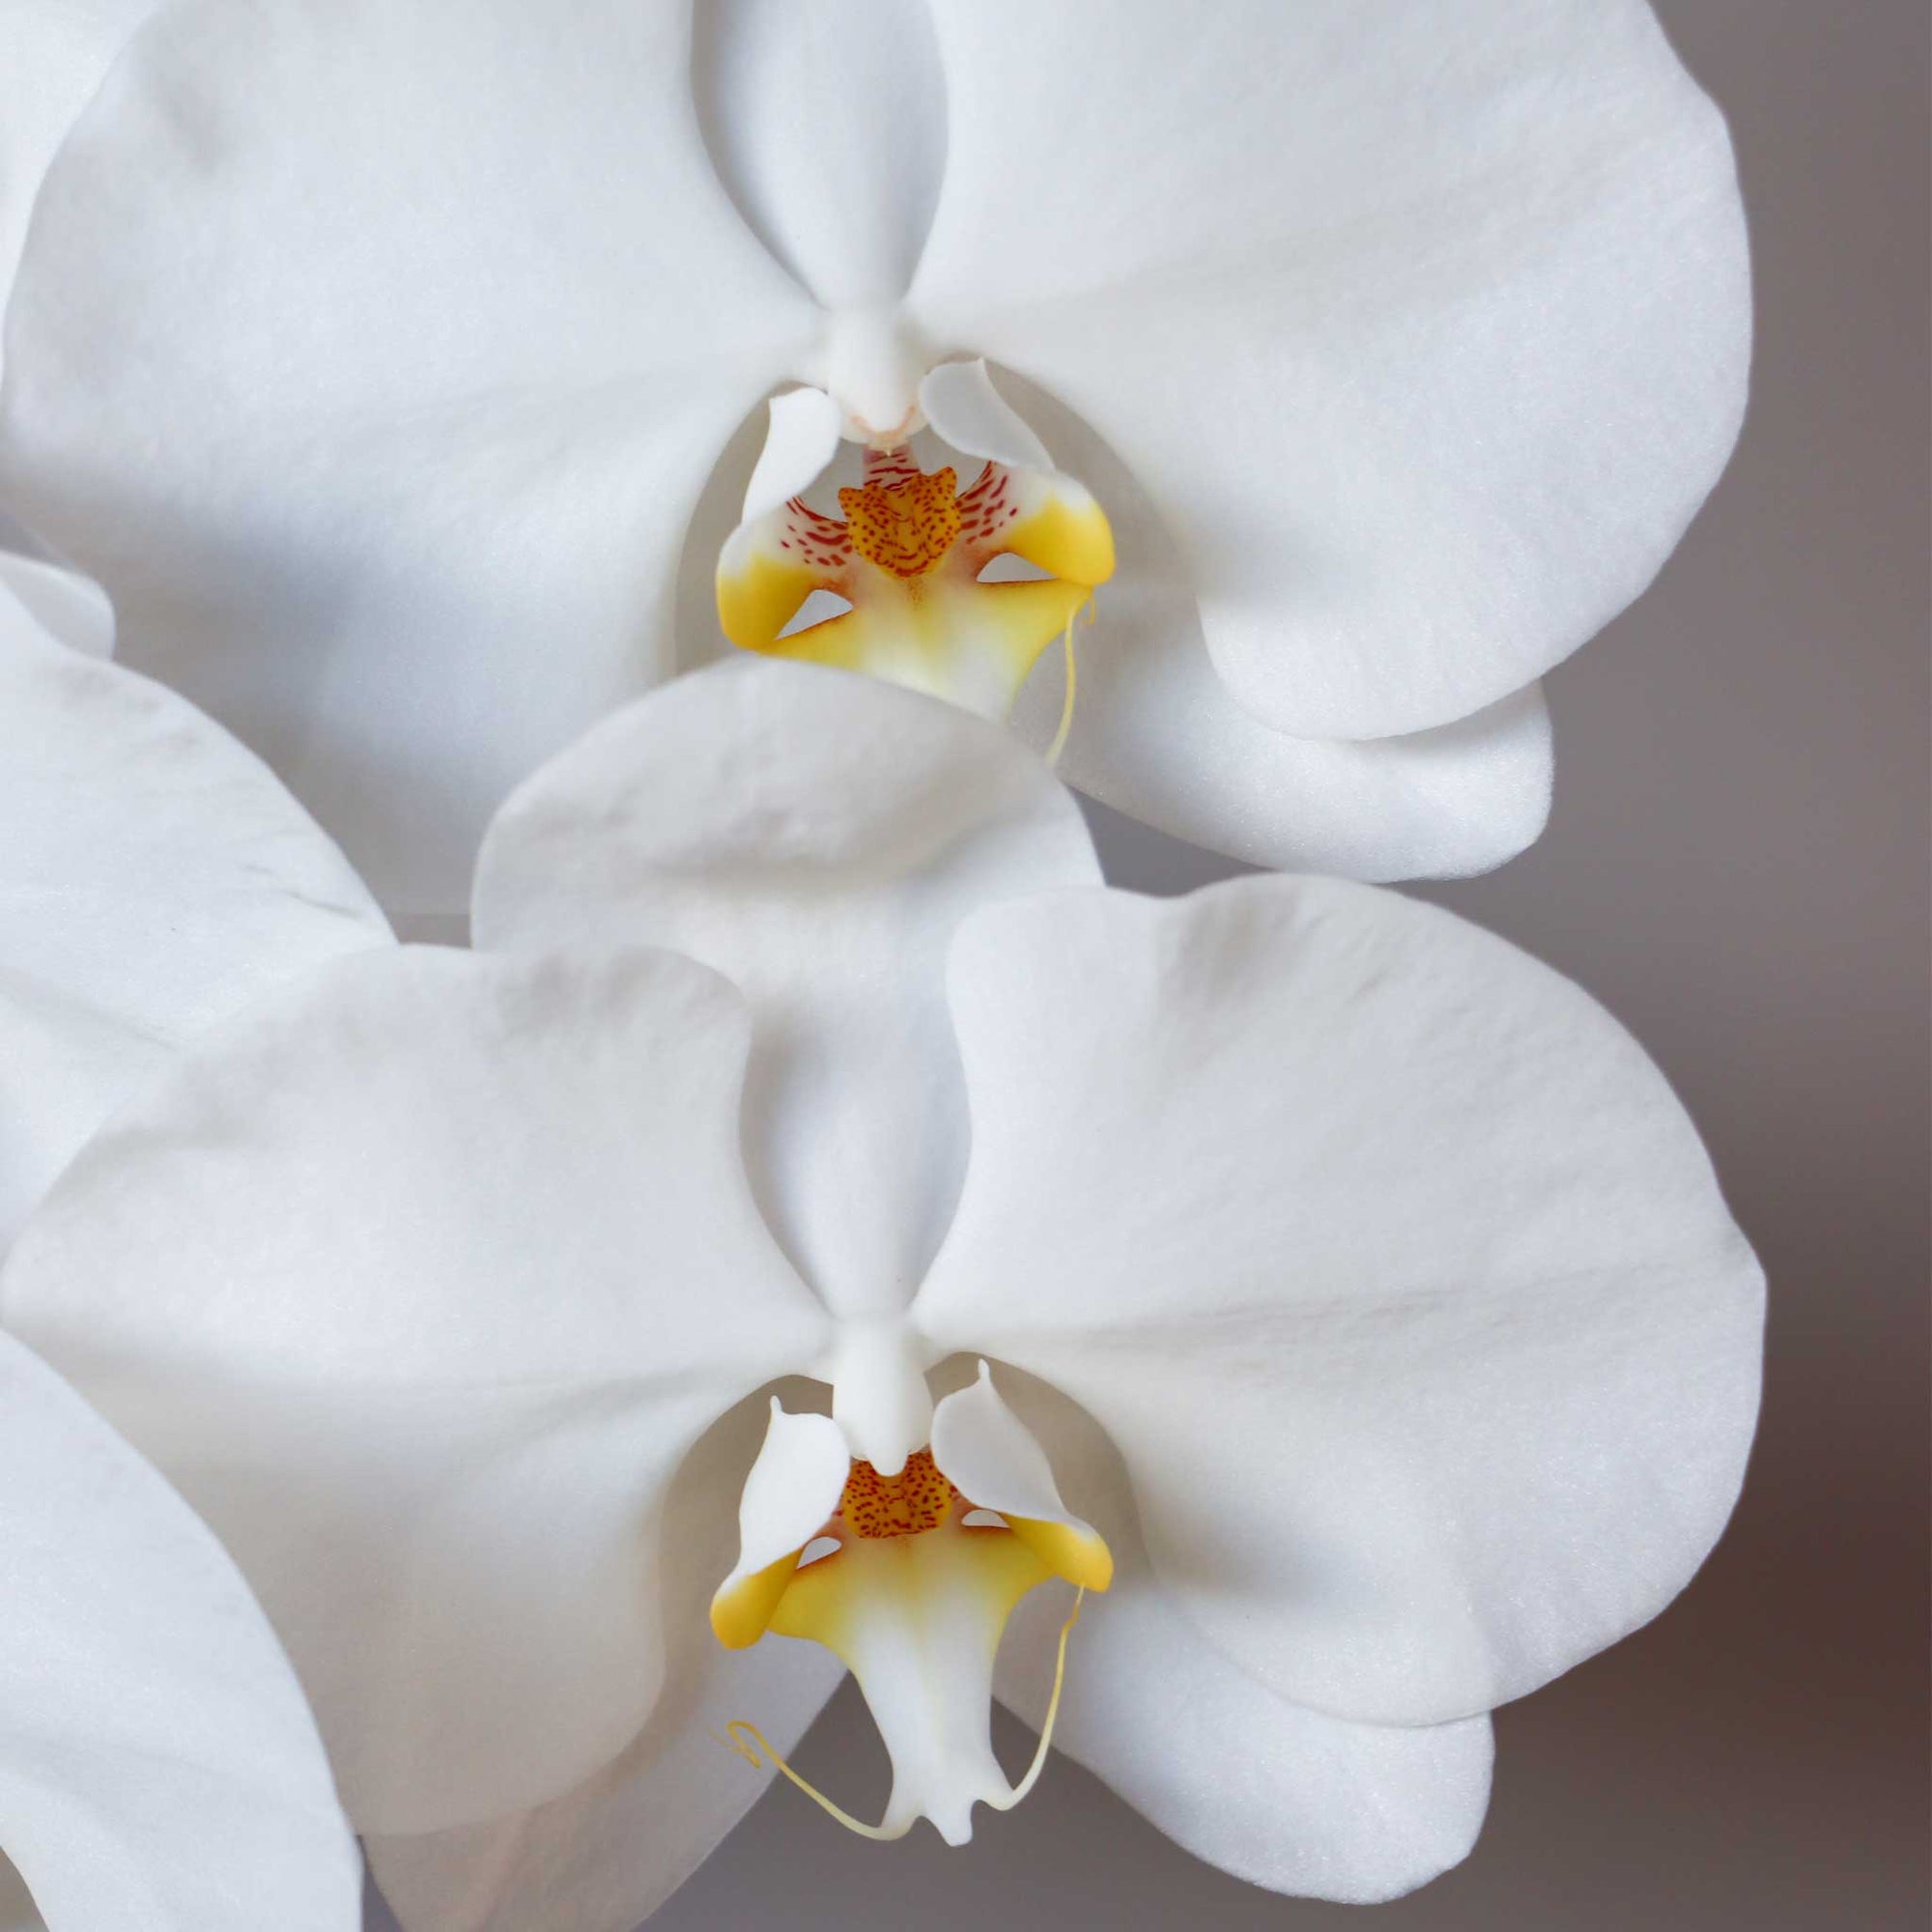 Phalaenopsis Cut Flower White